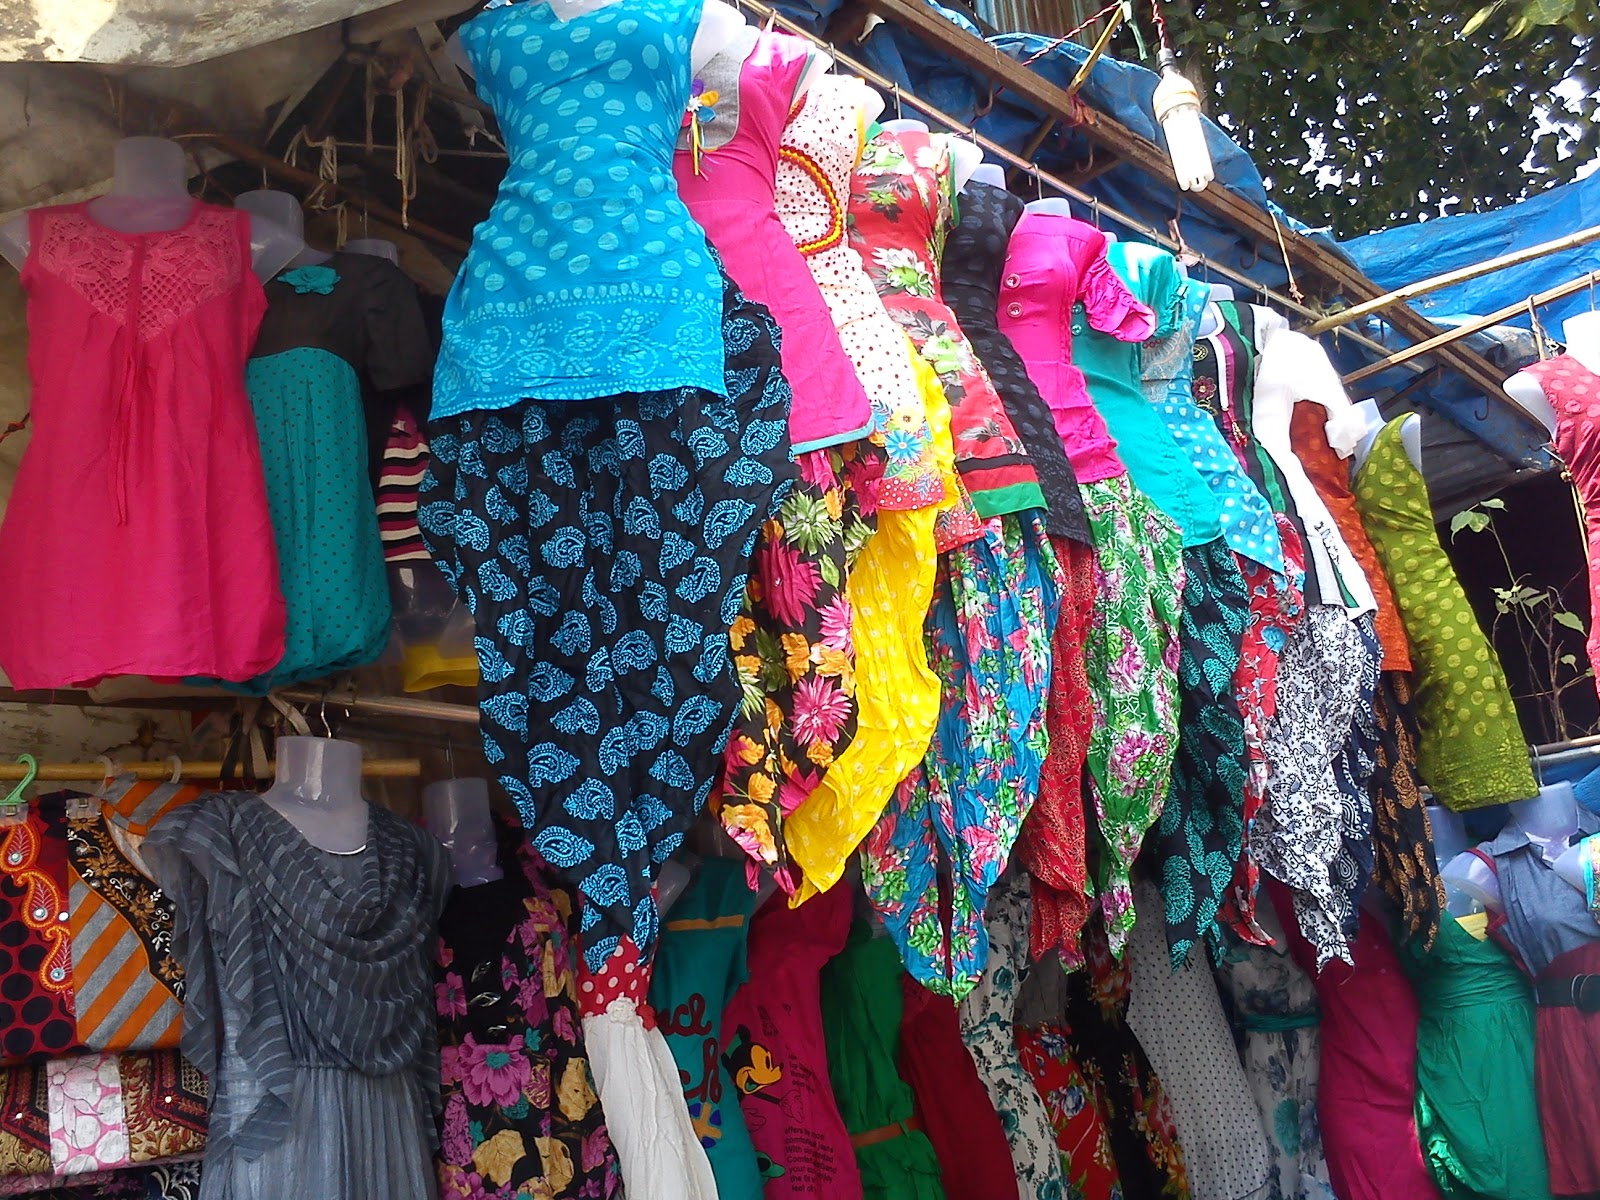 Tulsi baug (ladies shopping market) - Pune, shop till you drop